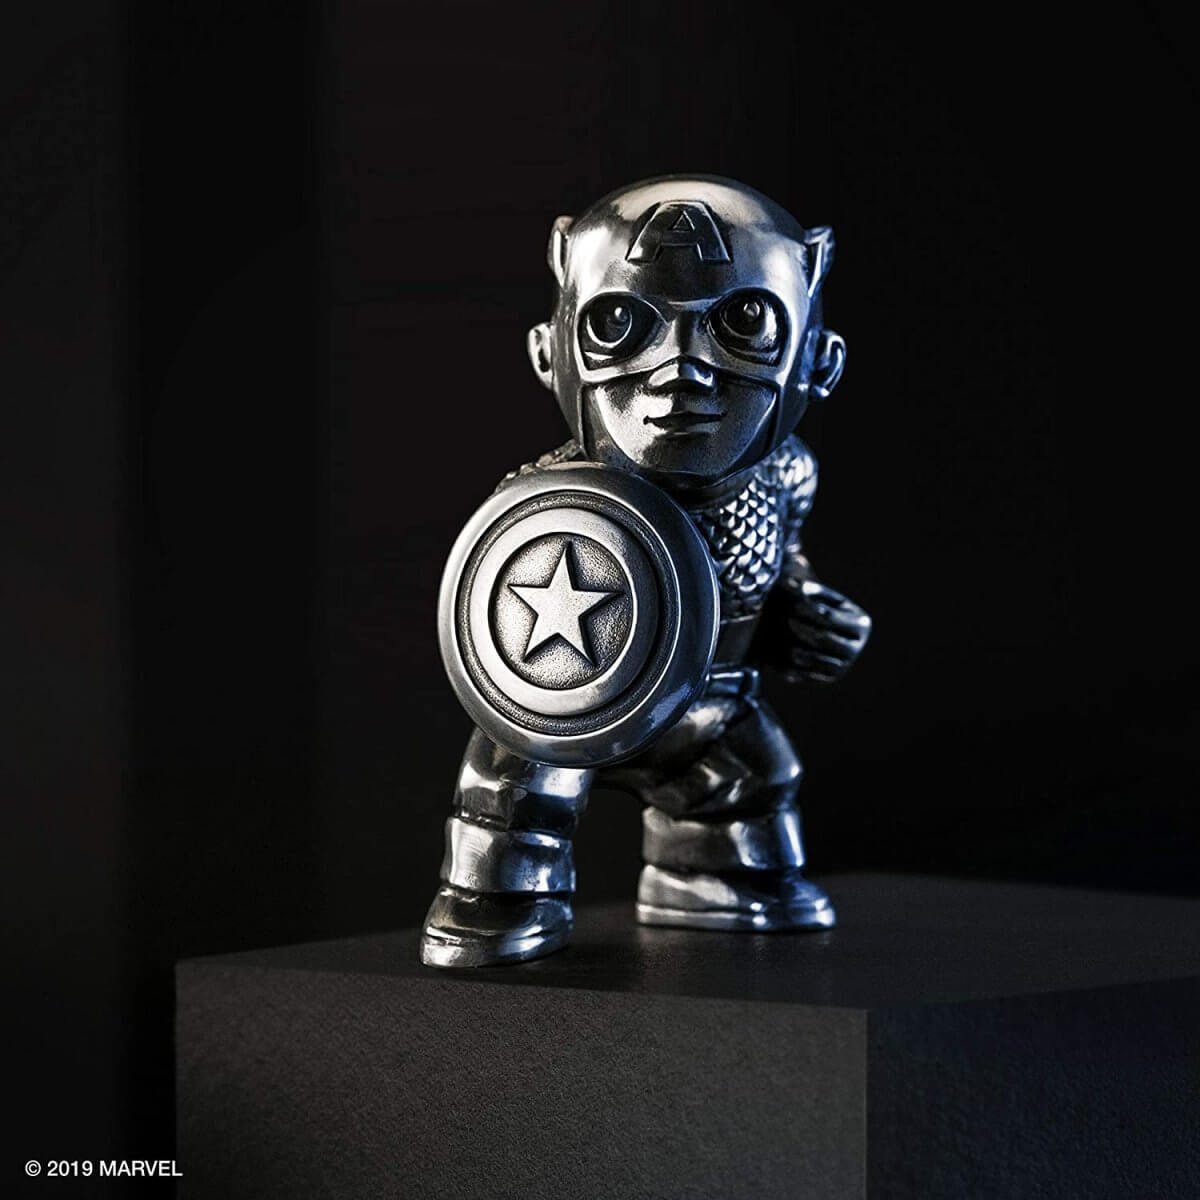 Captain America Miniature Figurine - Marvel Collectible gift